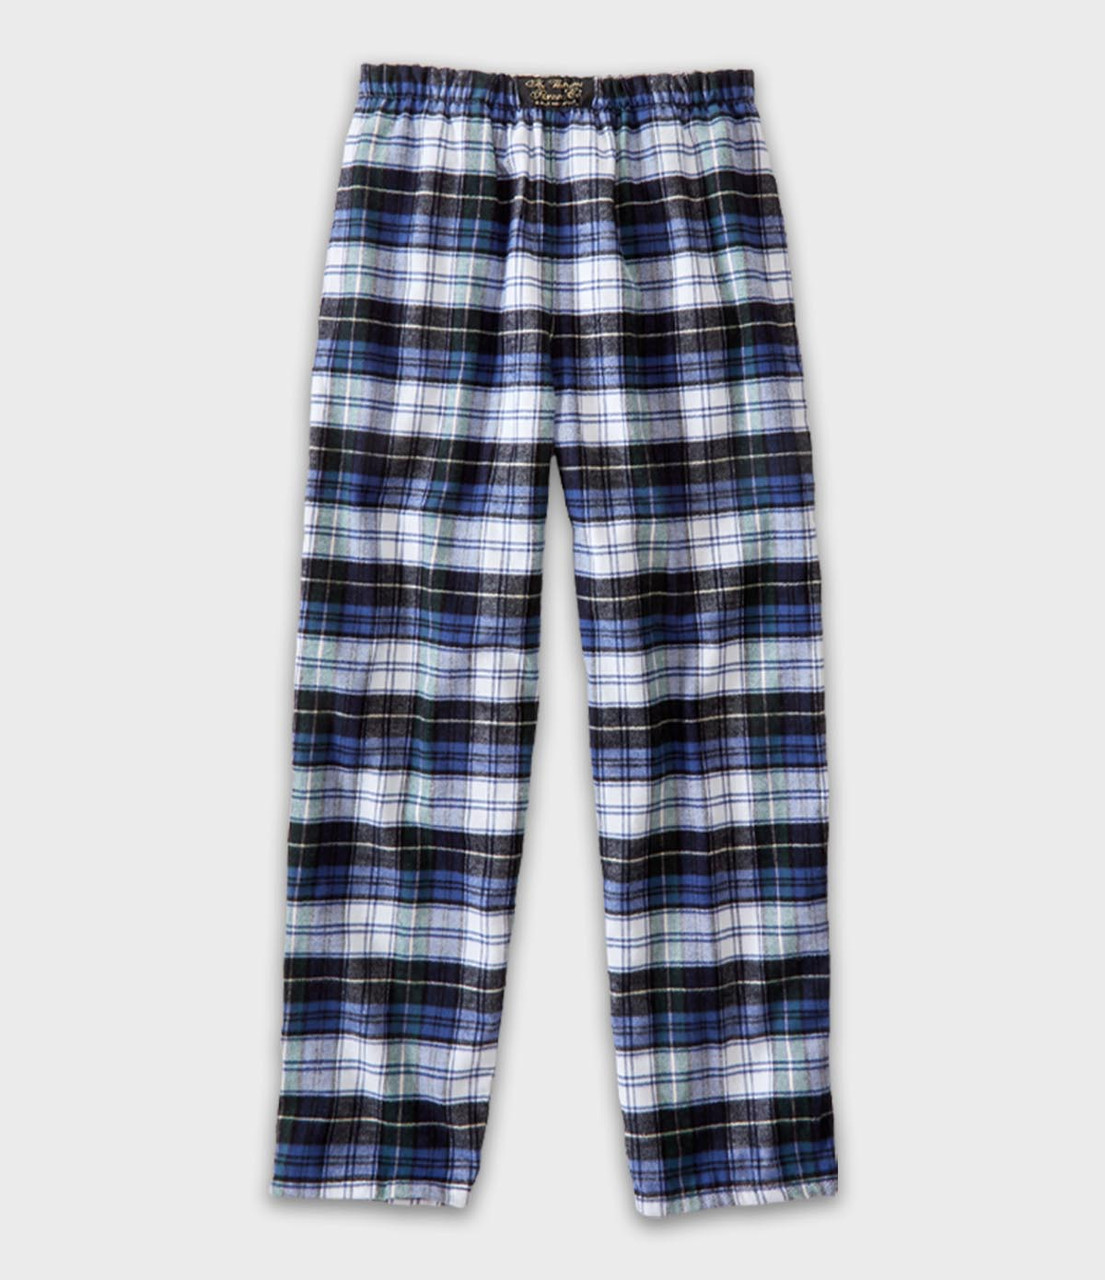  Real Essentials 3 Pack: Big Boys Pajama Pants Fleece